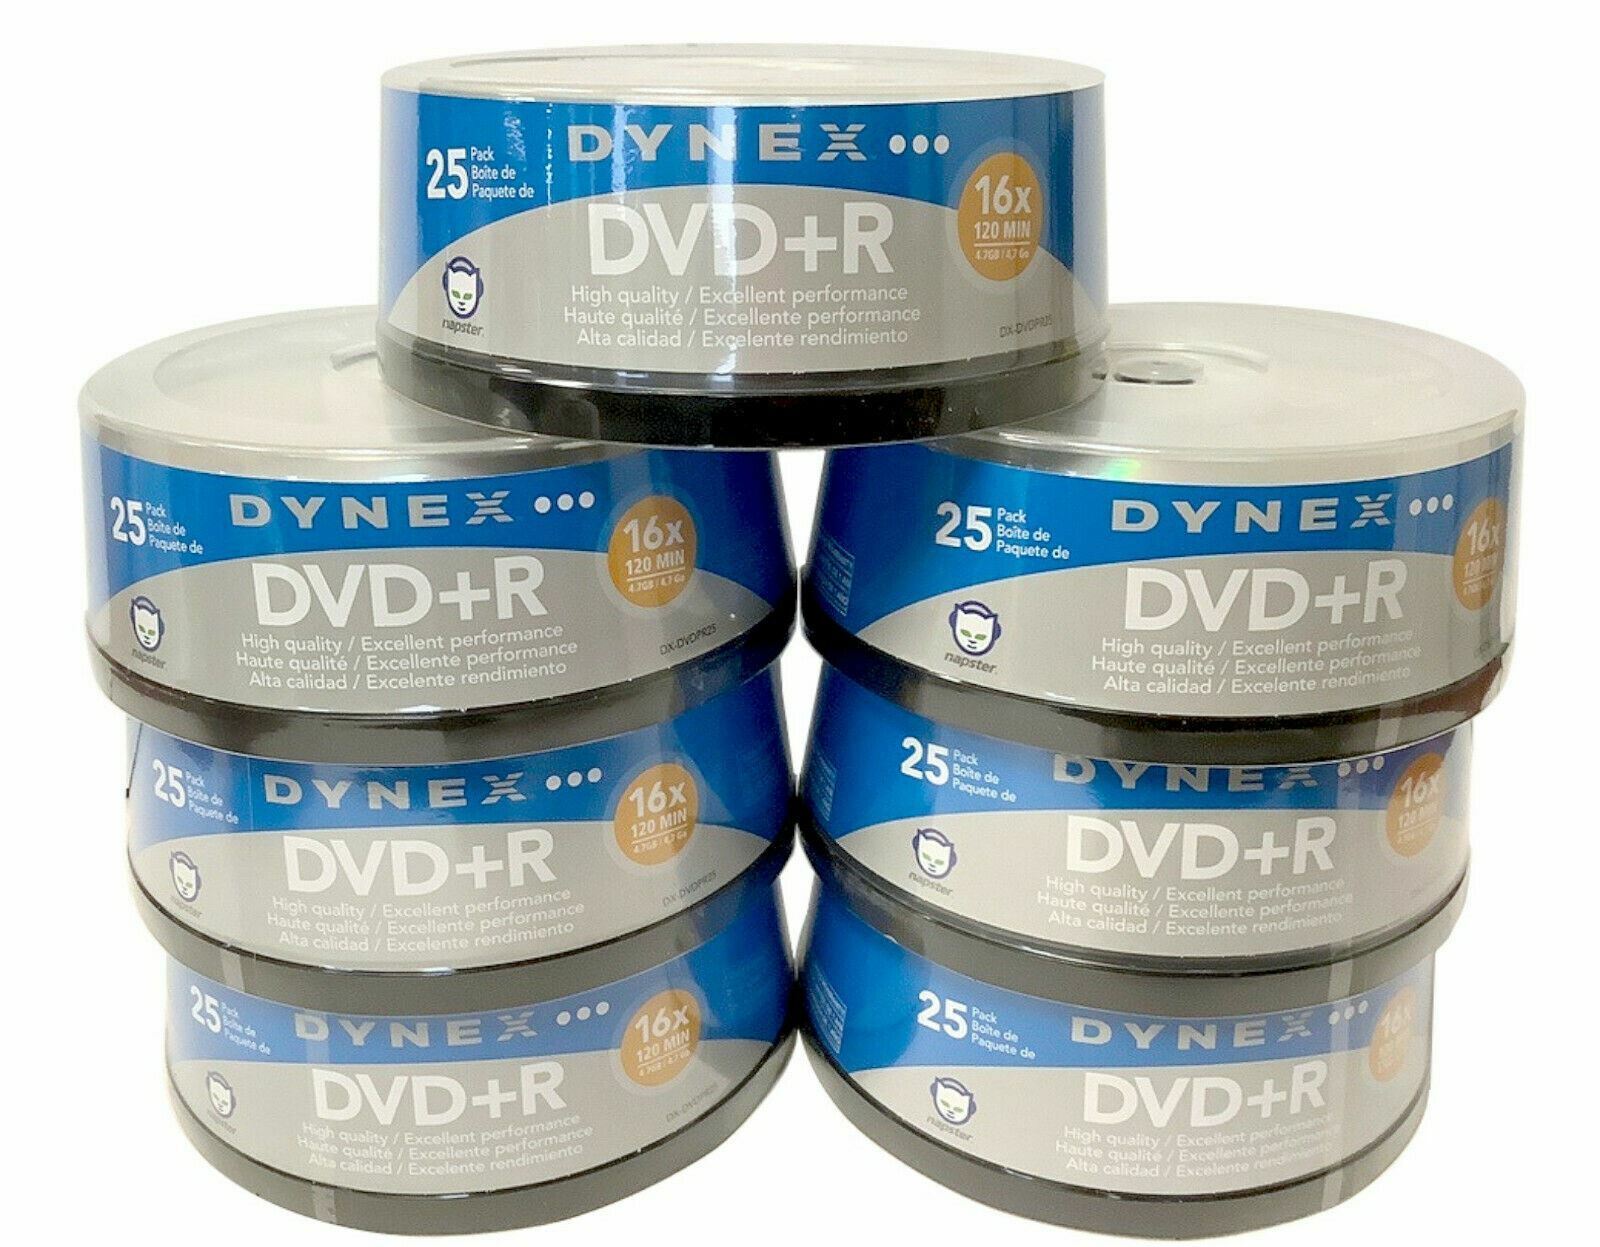 NEW Dynex DX-DVDPR25 175-Pack 16x DVD+R Disc Spindle Digital Media Storage disk